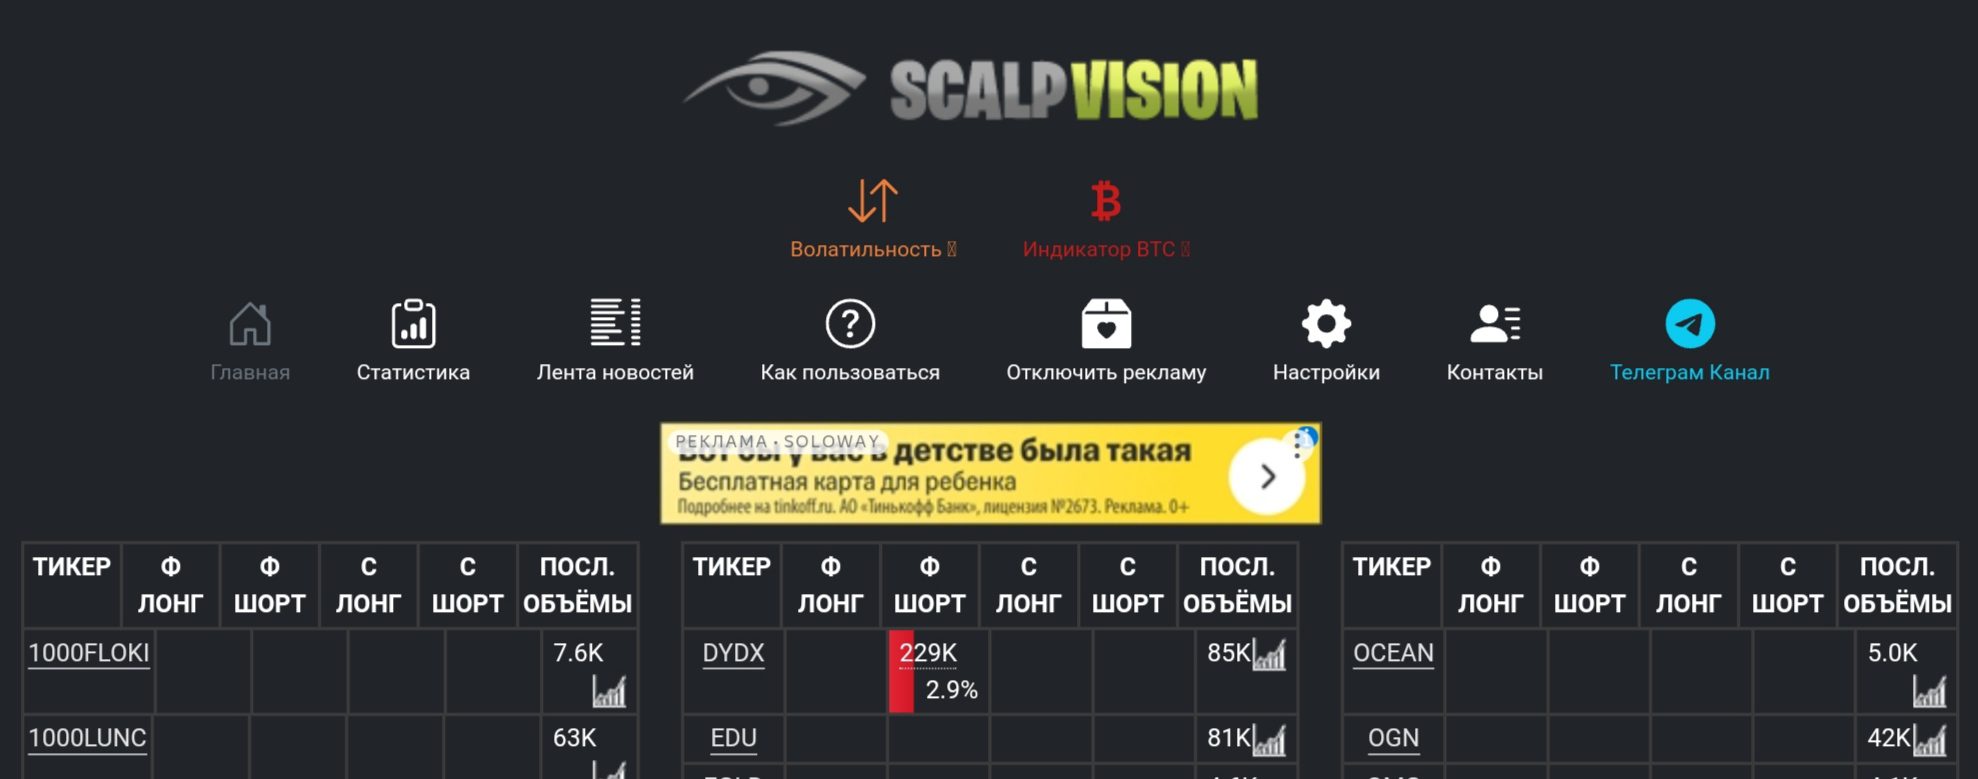 Scalp Vision сайт